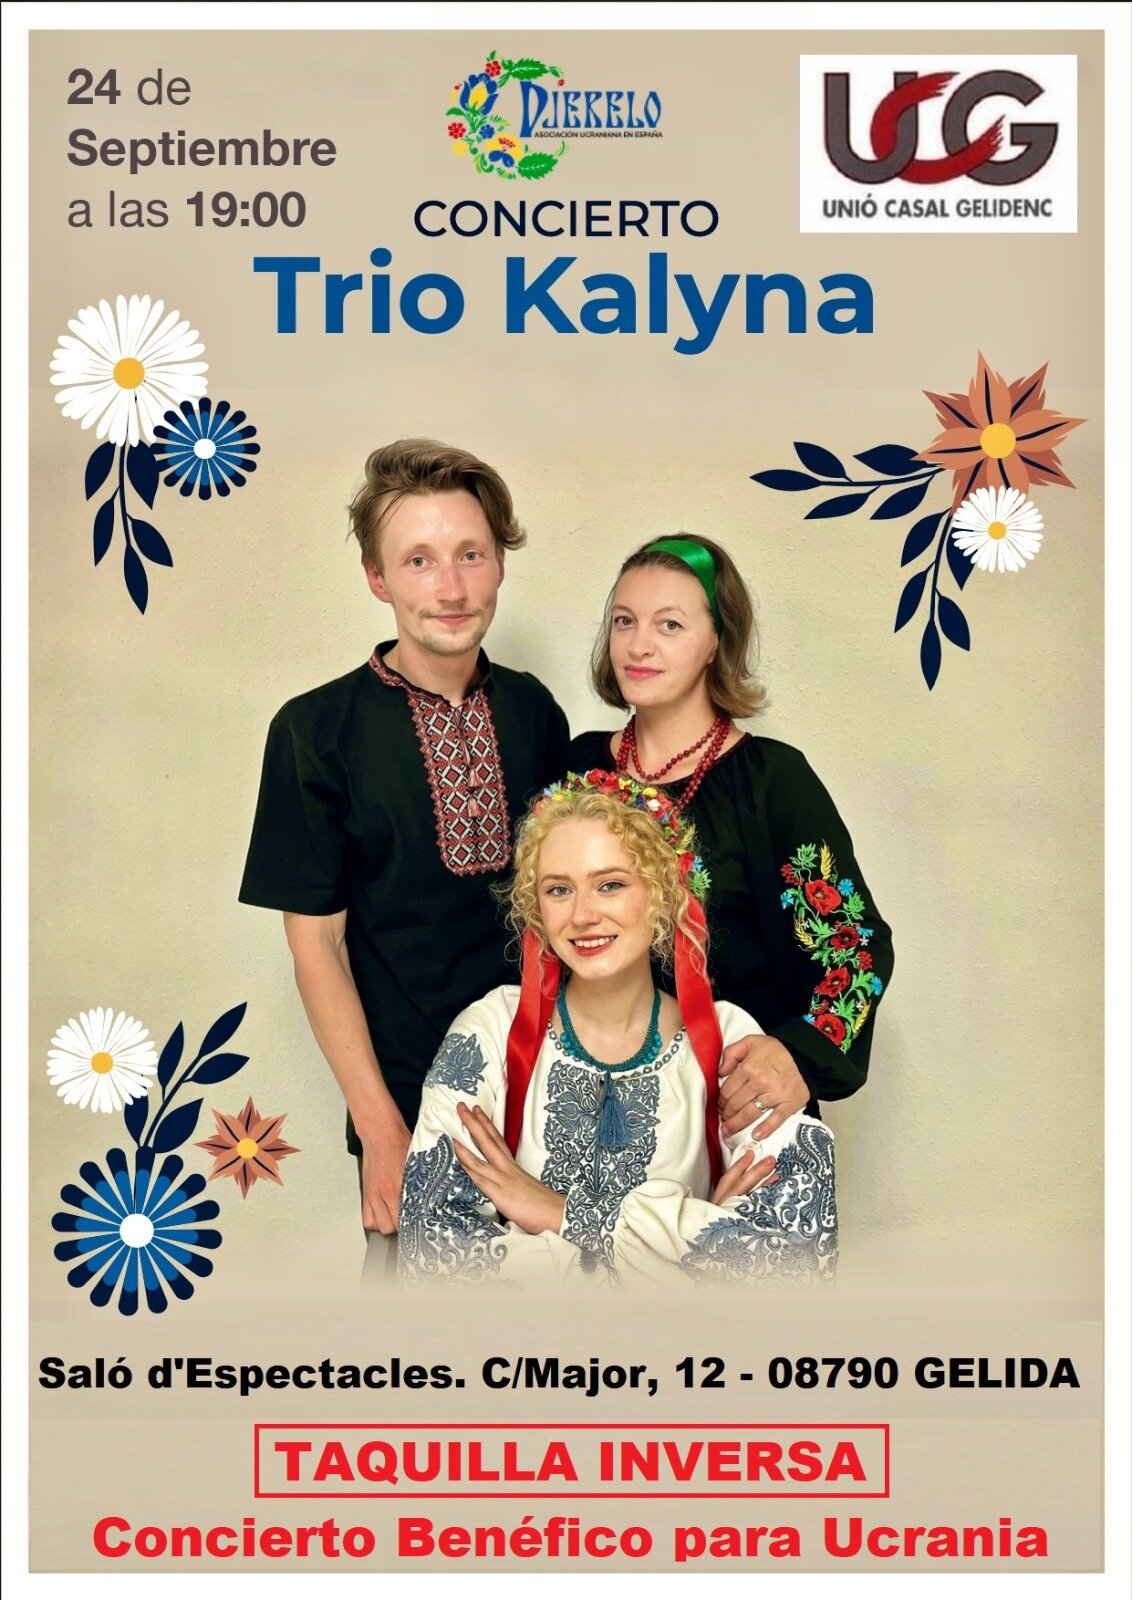 La Bustia cartell concert Trio Kalyna